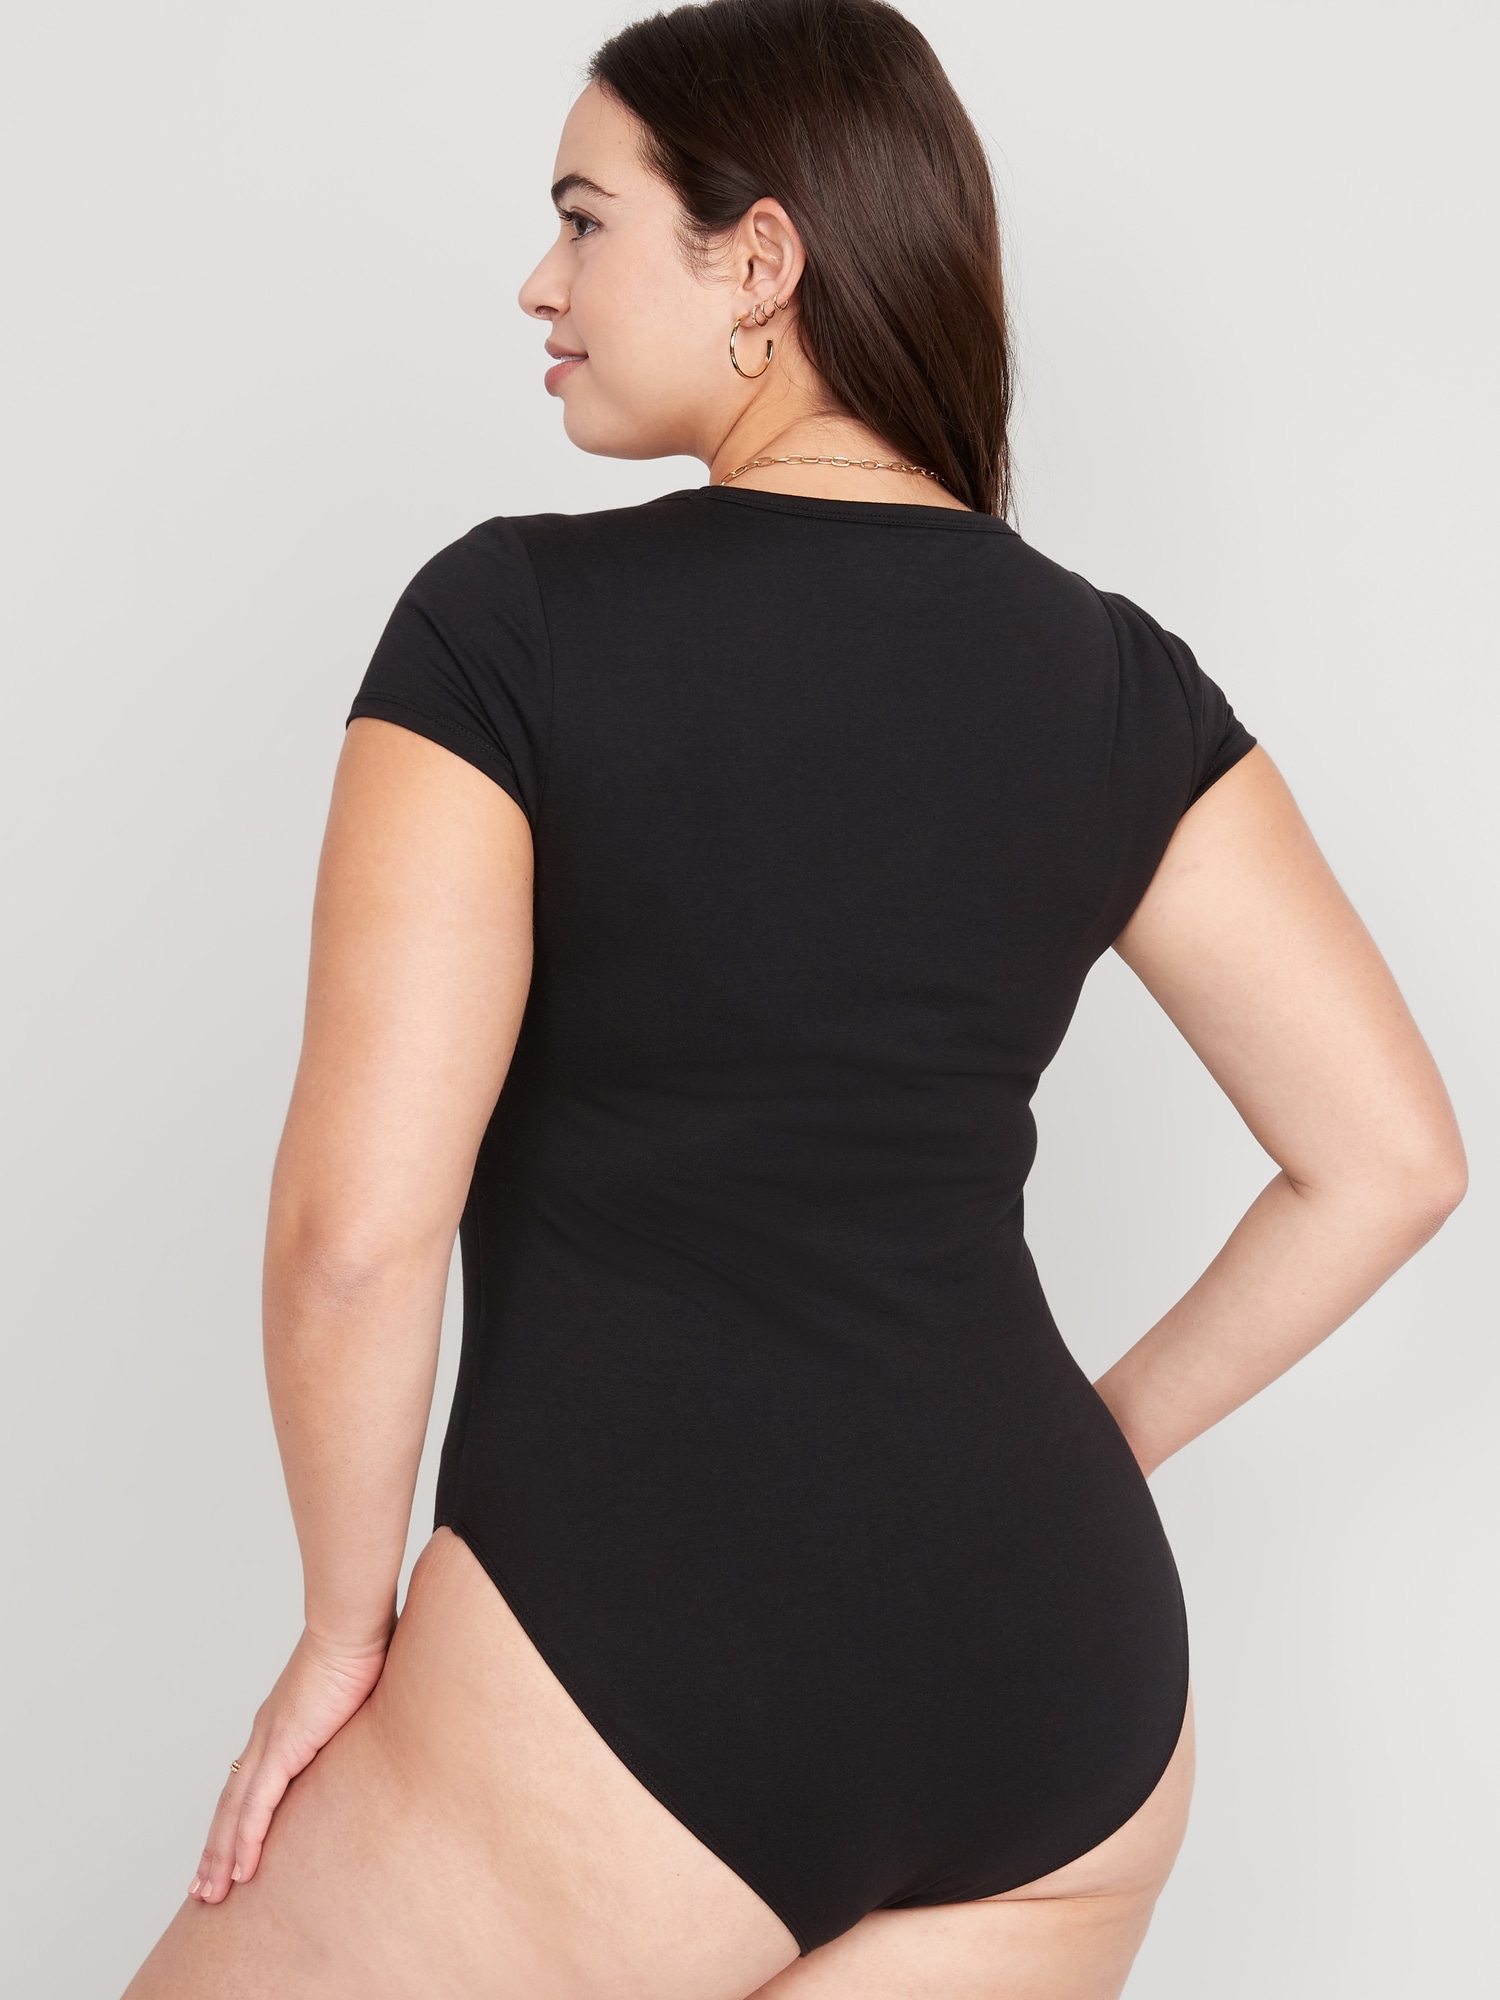 Short-Sleeve Scoop-Neck Bodysuit for Women